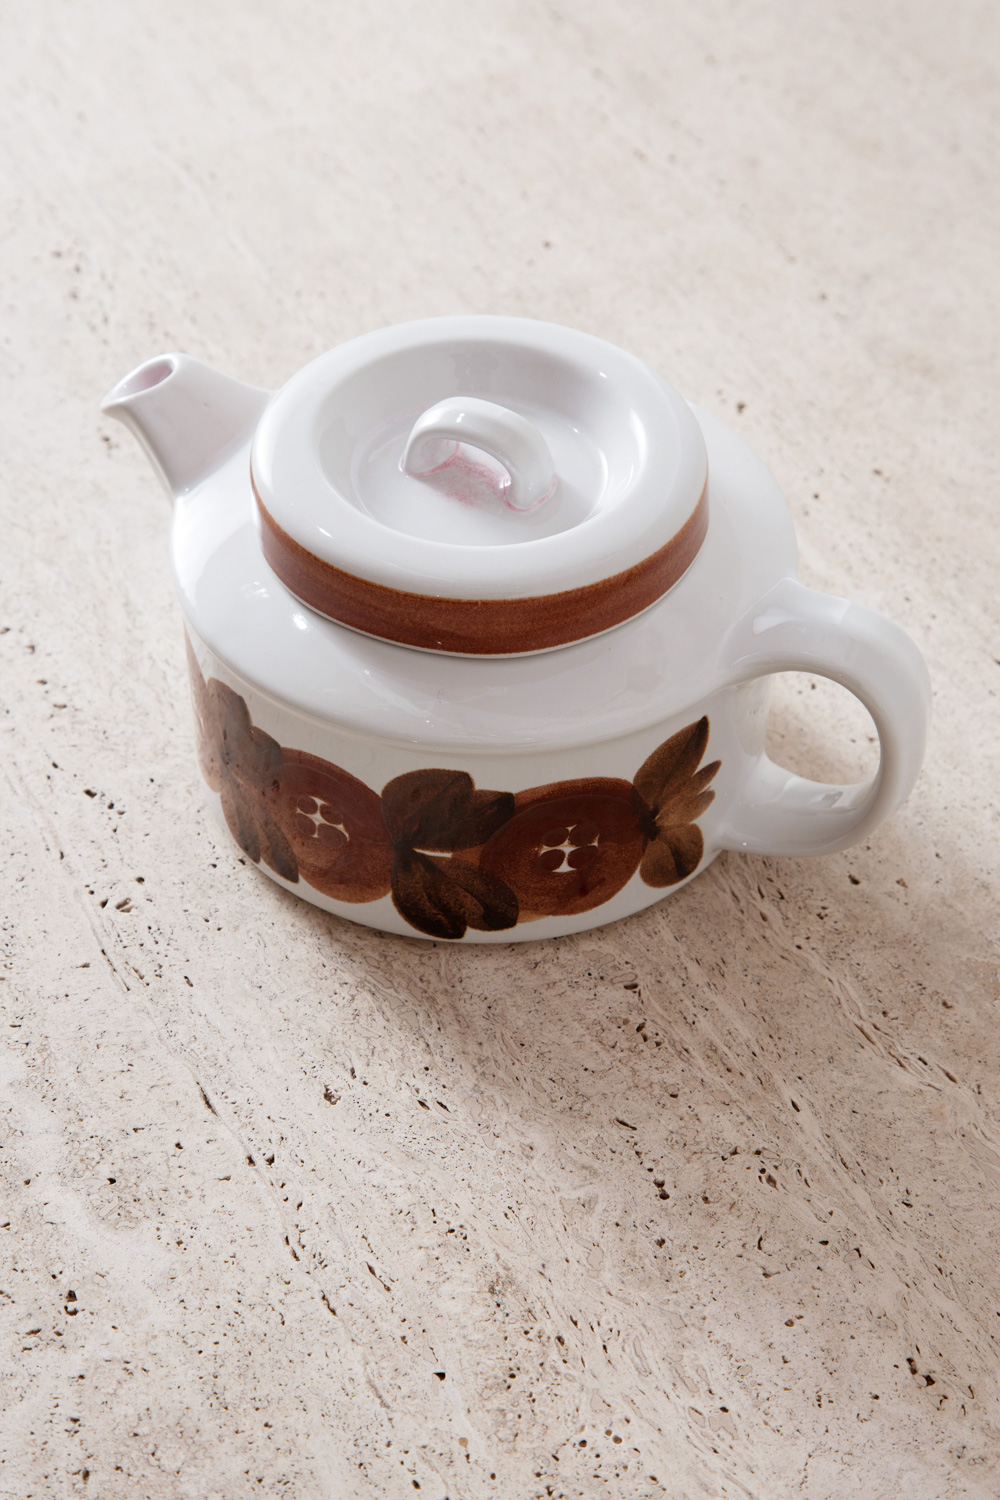 Tea Pot  “Rosmain” for ARABIA by Ulla Procope